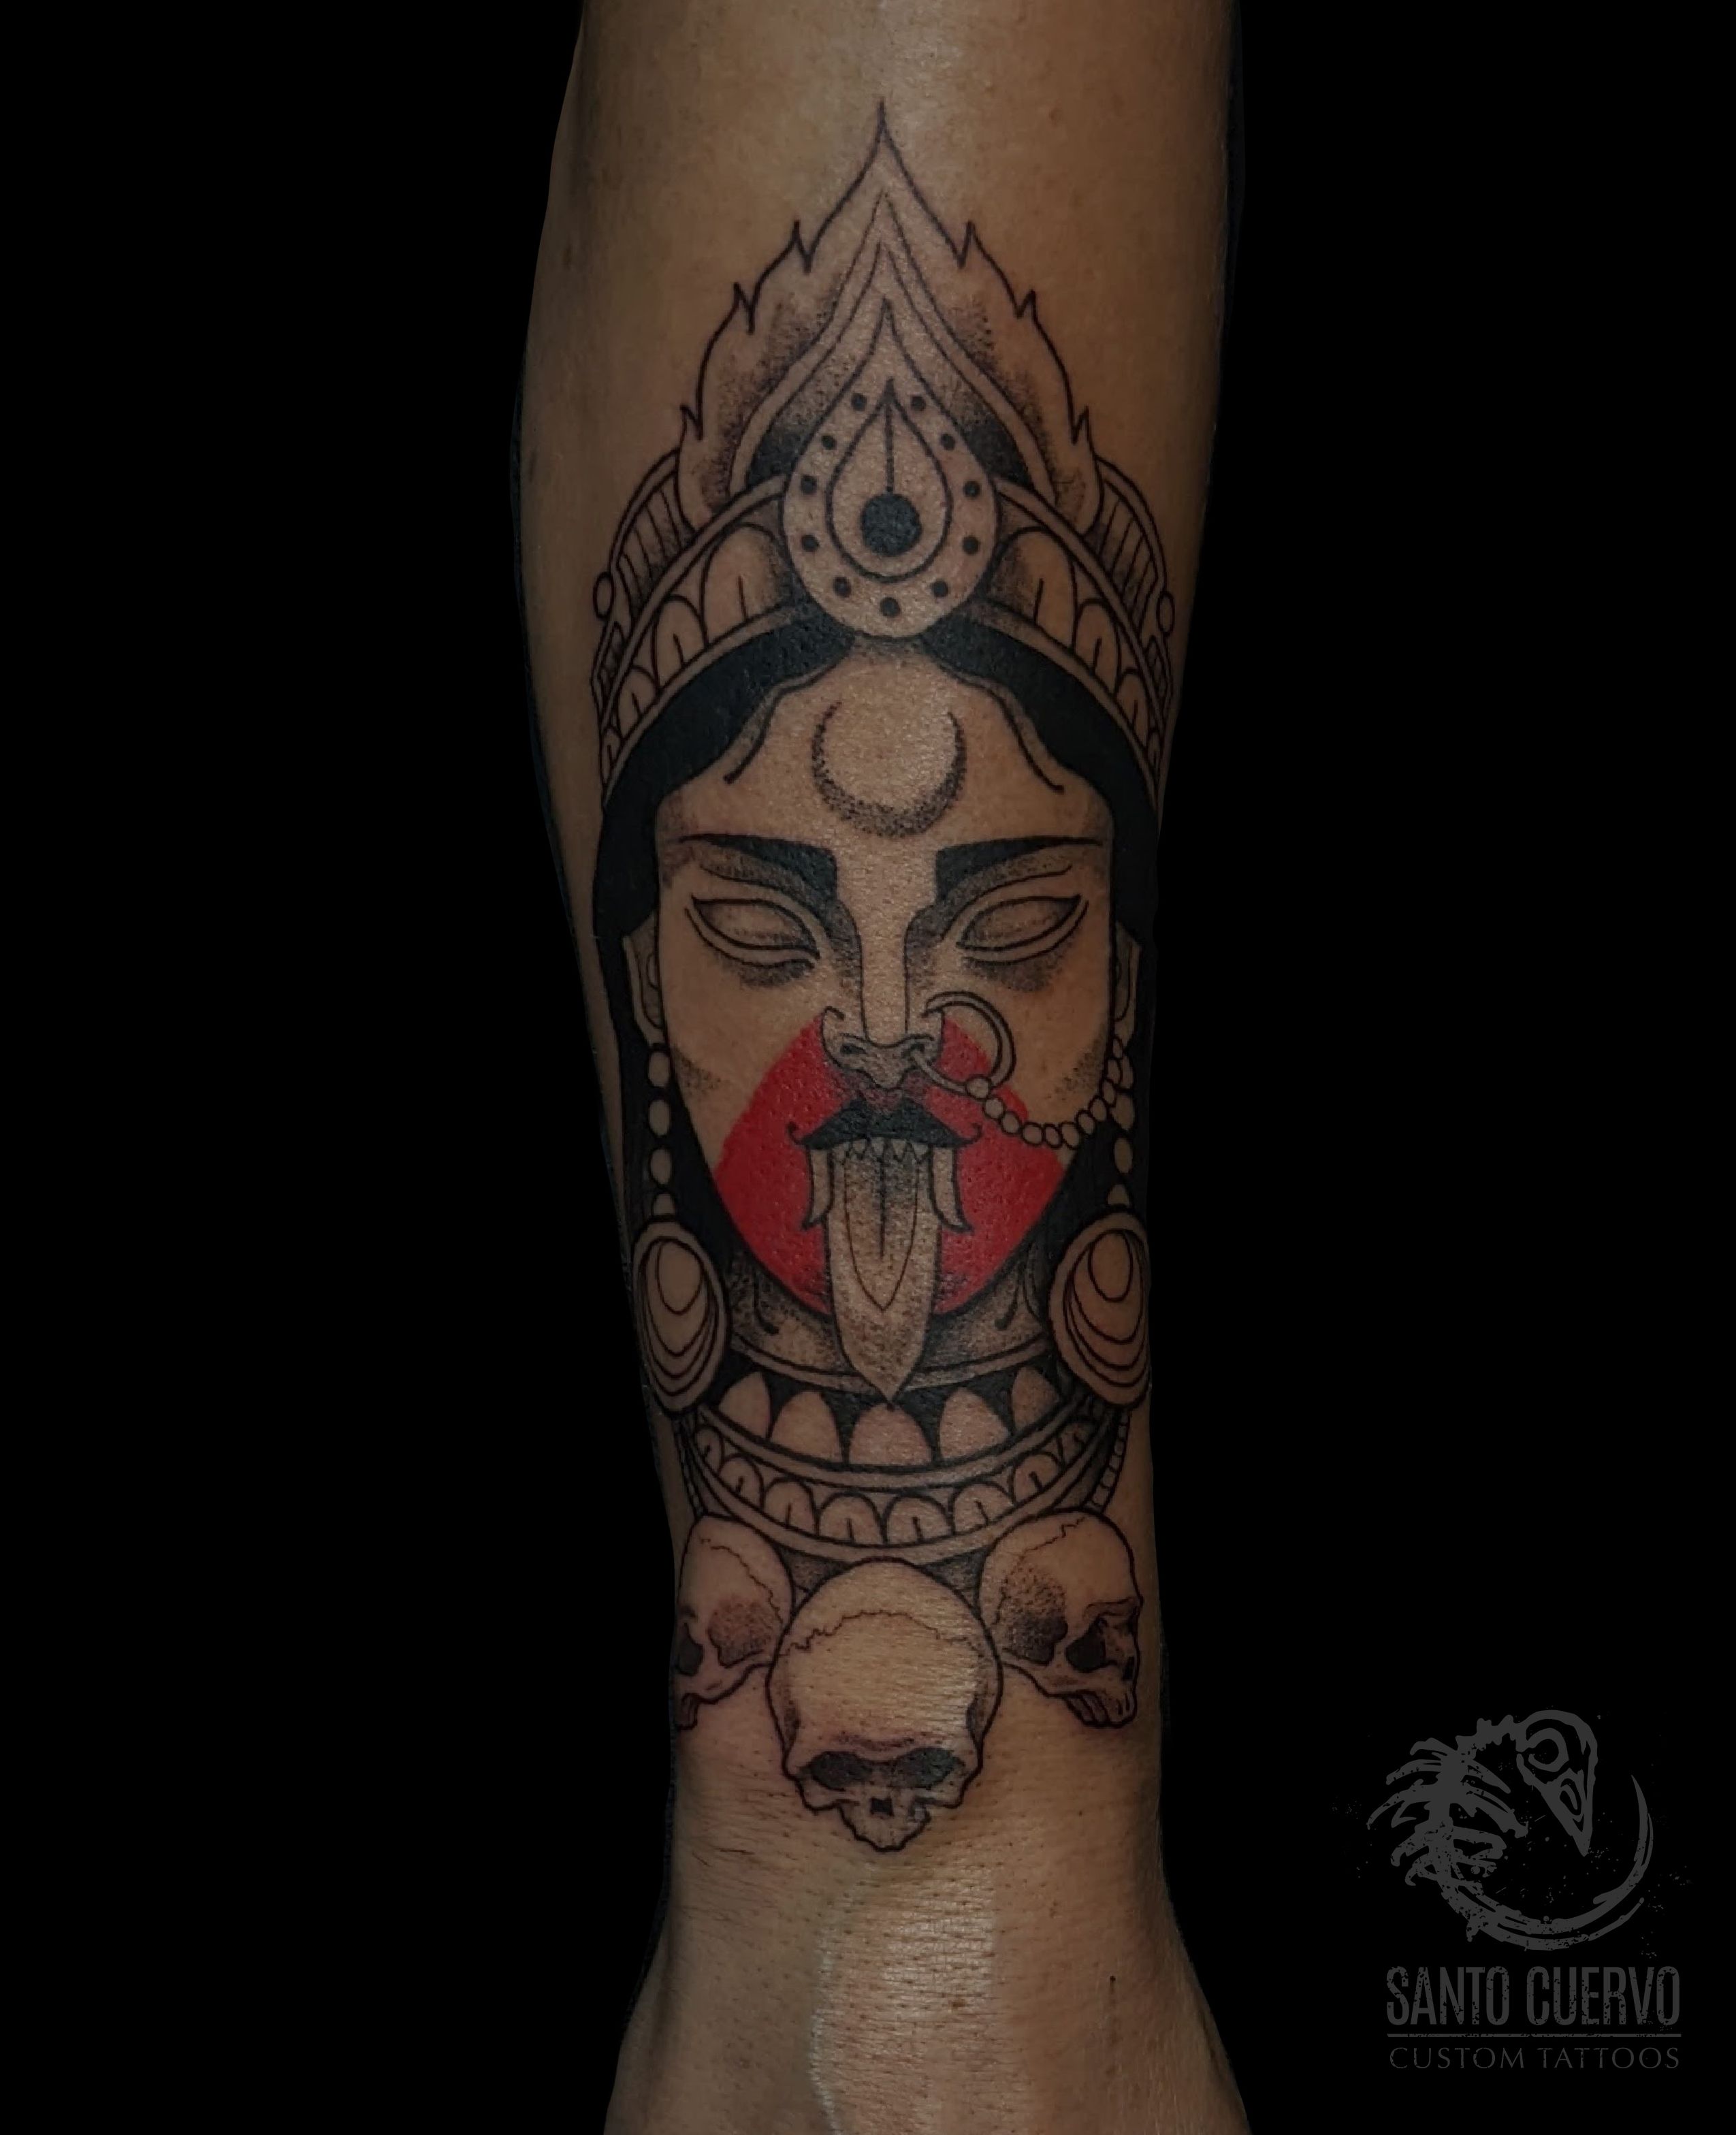 50 Amazing Goddess Kali Tattoos with Meanings Ideas and Celebrities   Body Art Guru